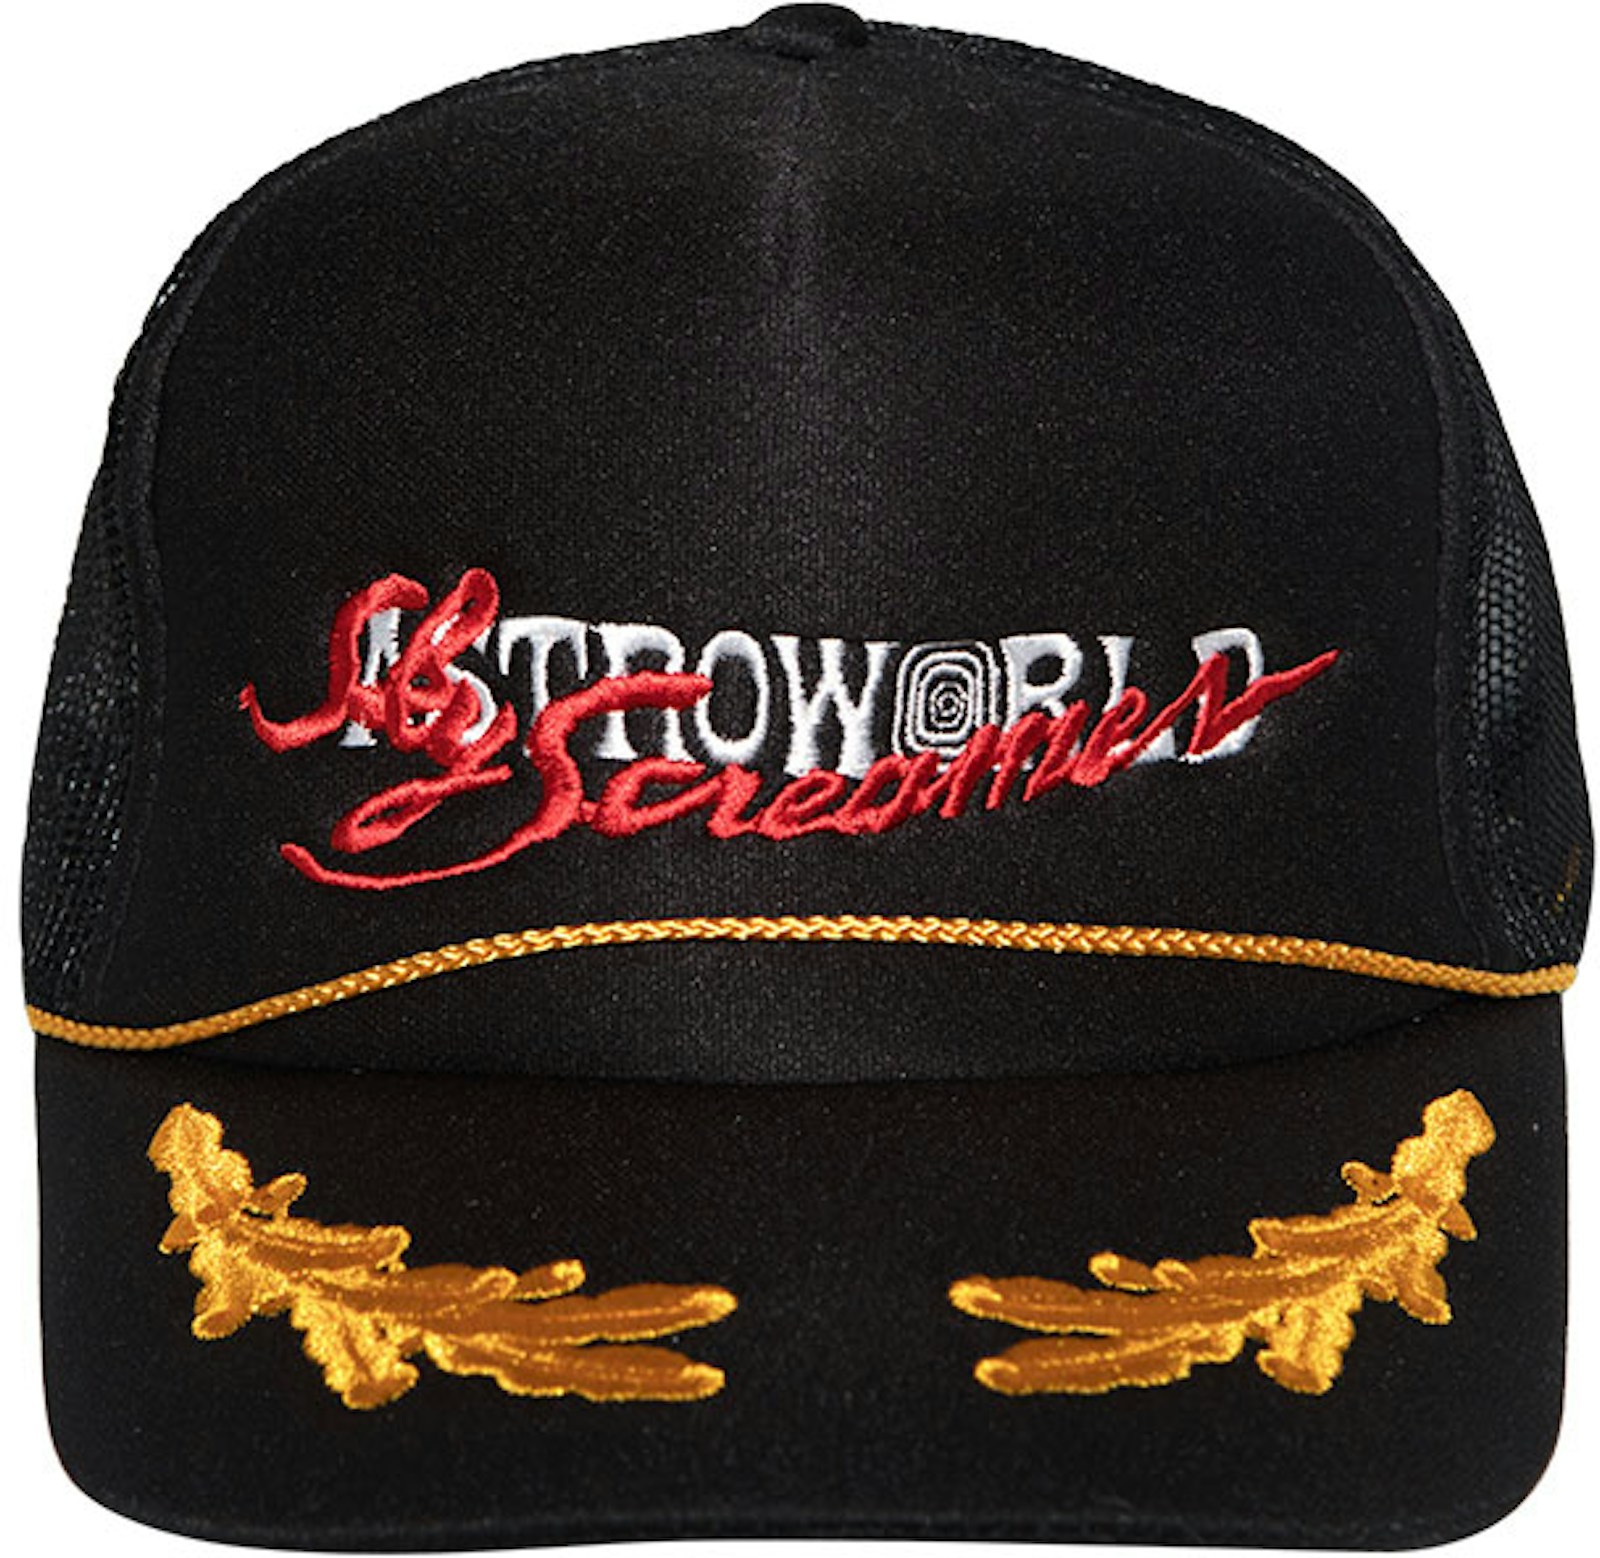 Travis Scott Astroworld X DSM NY Trucker Hat Black - SS19